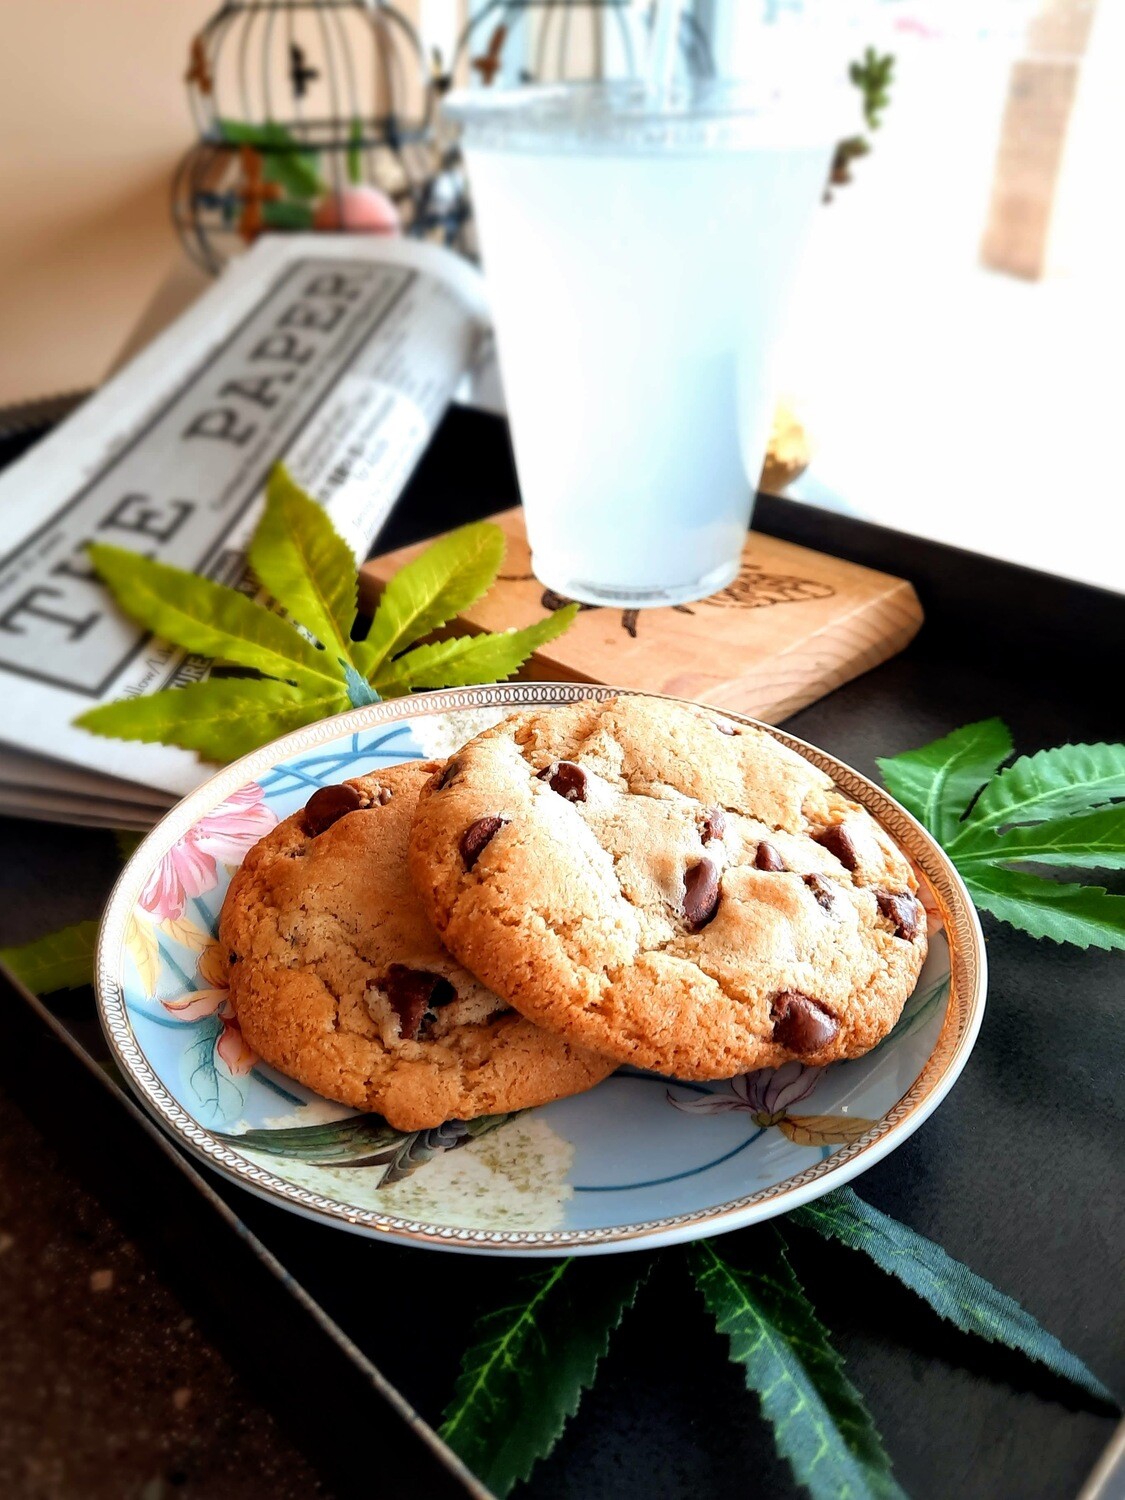 Vegan Chocolate Chip Cookie